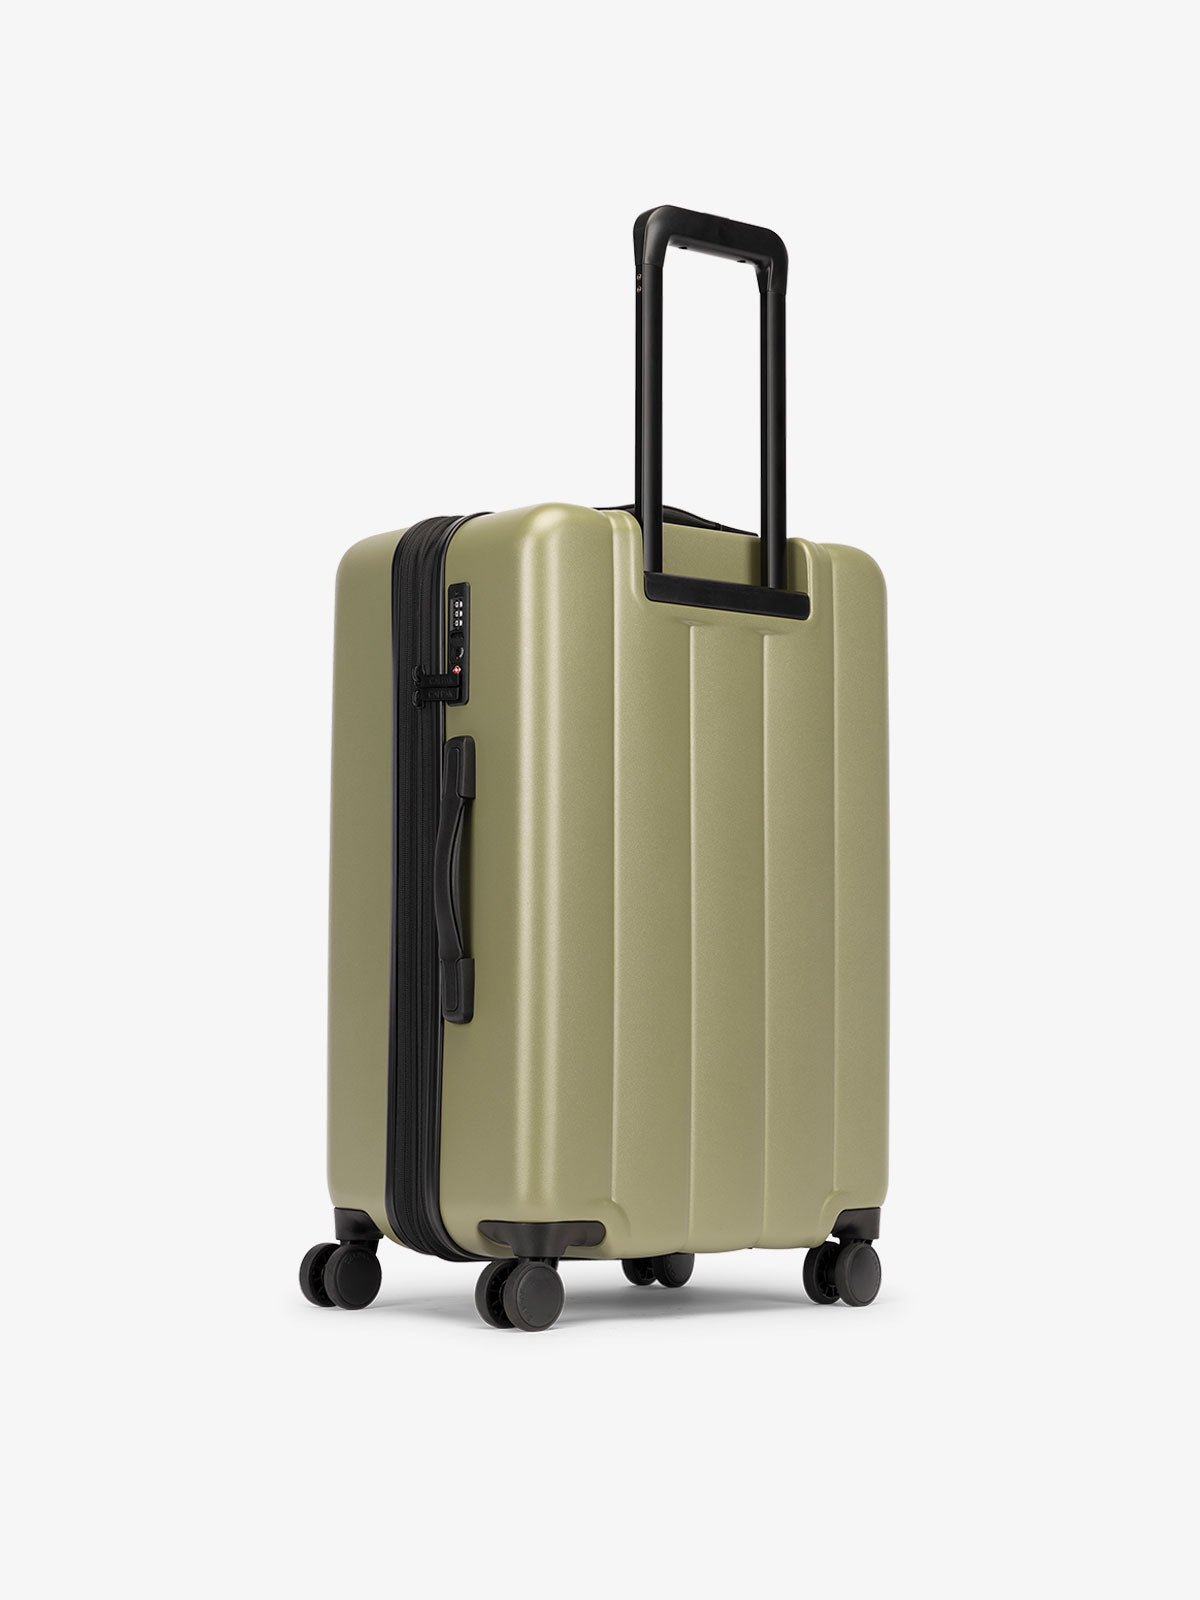 CALPAK medium luggage featuring dual spinner wheels and bottom grab handle in pistachio